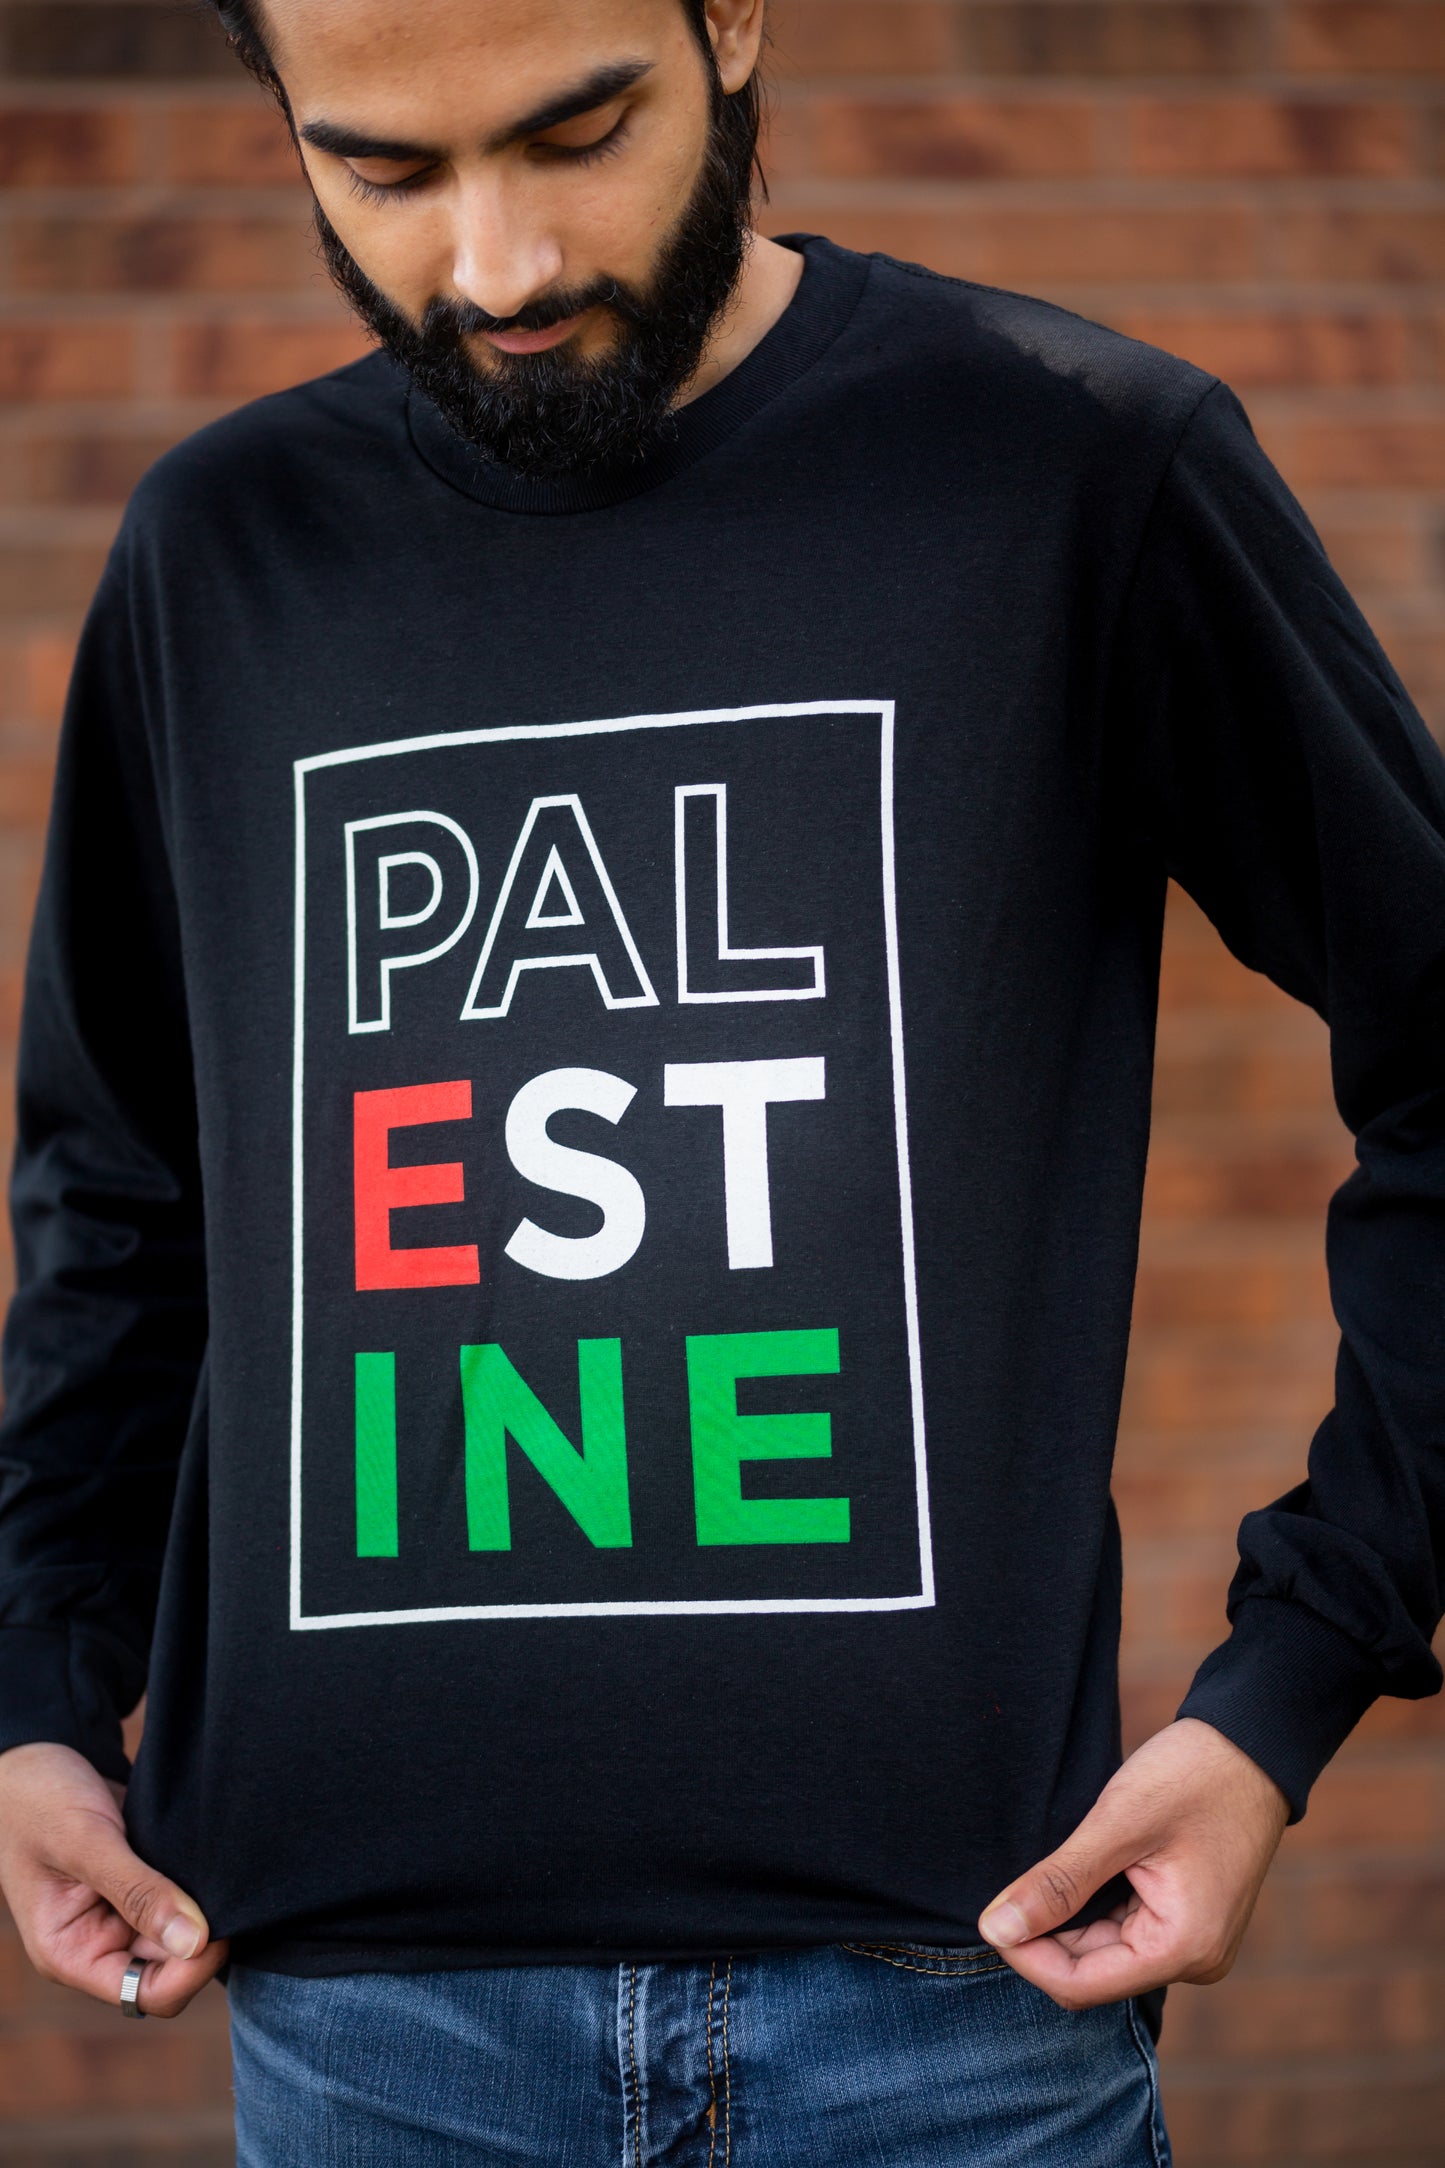 Palestine Text Long Sleeve